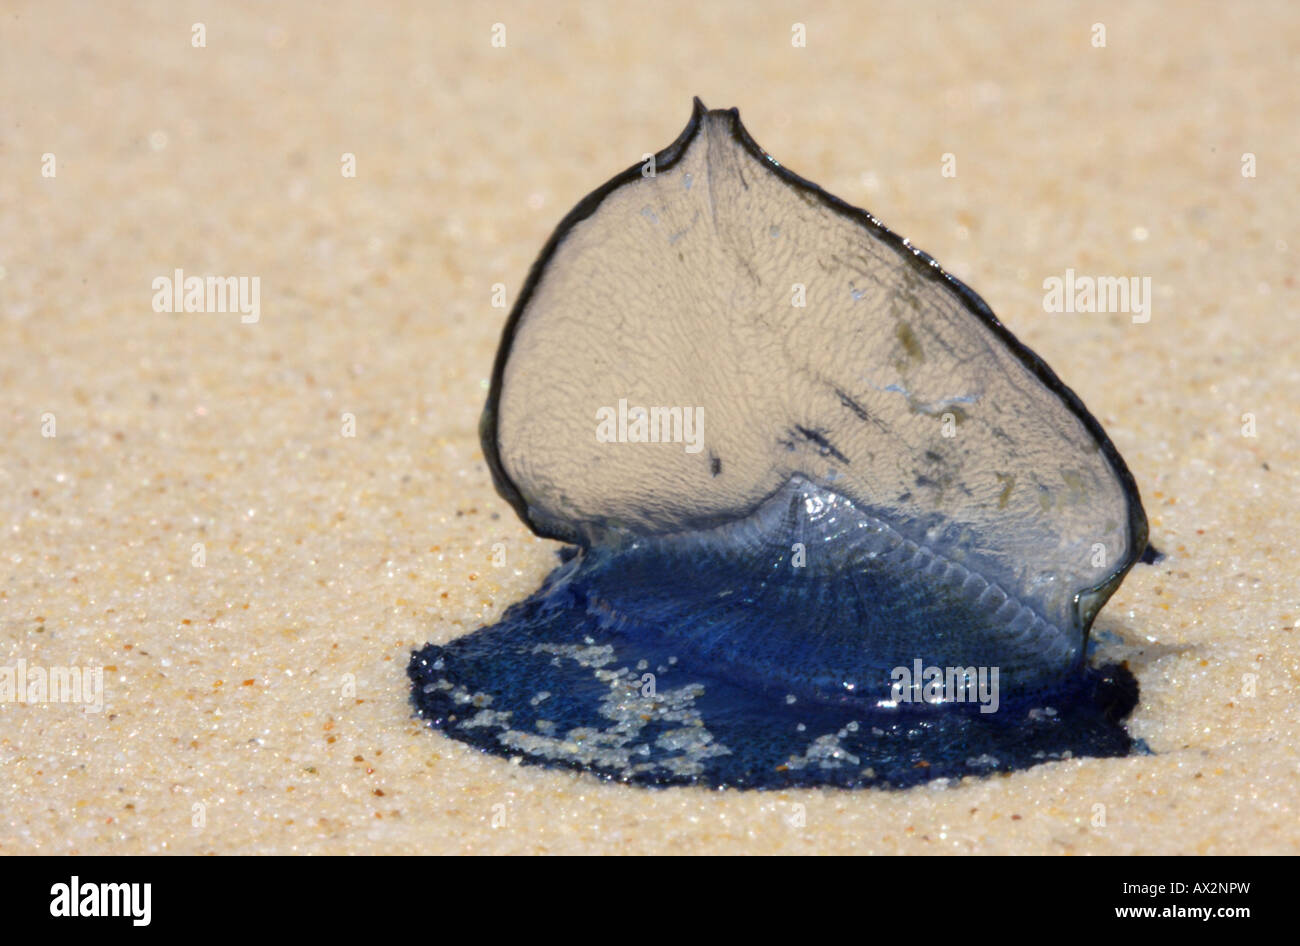 Blue Bottle Jellyfish (Portuguese Man of War) (Physalia utriculus), specimen on beach Stock Photo